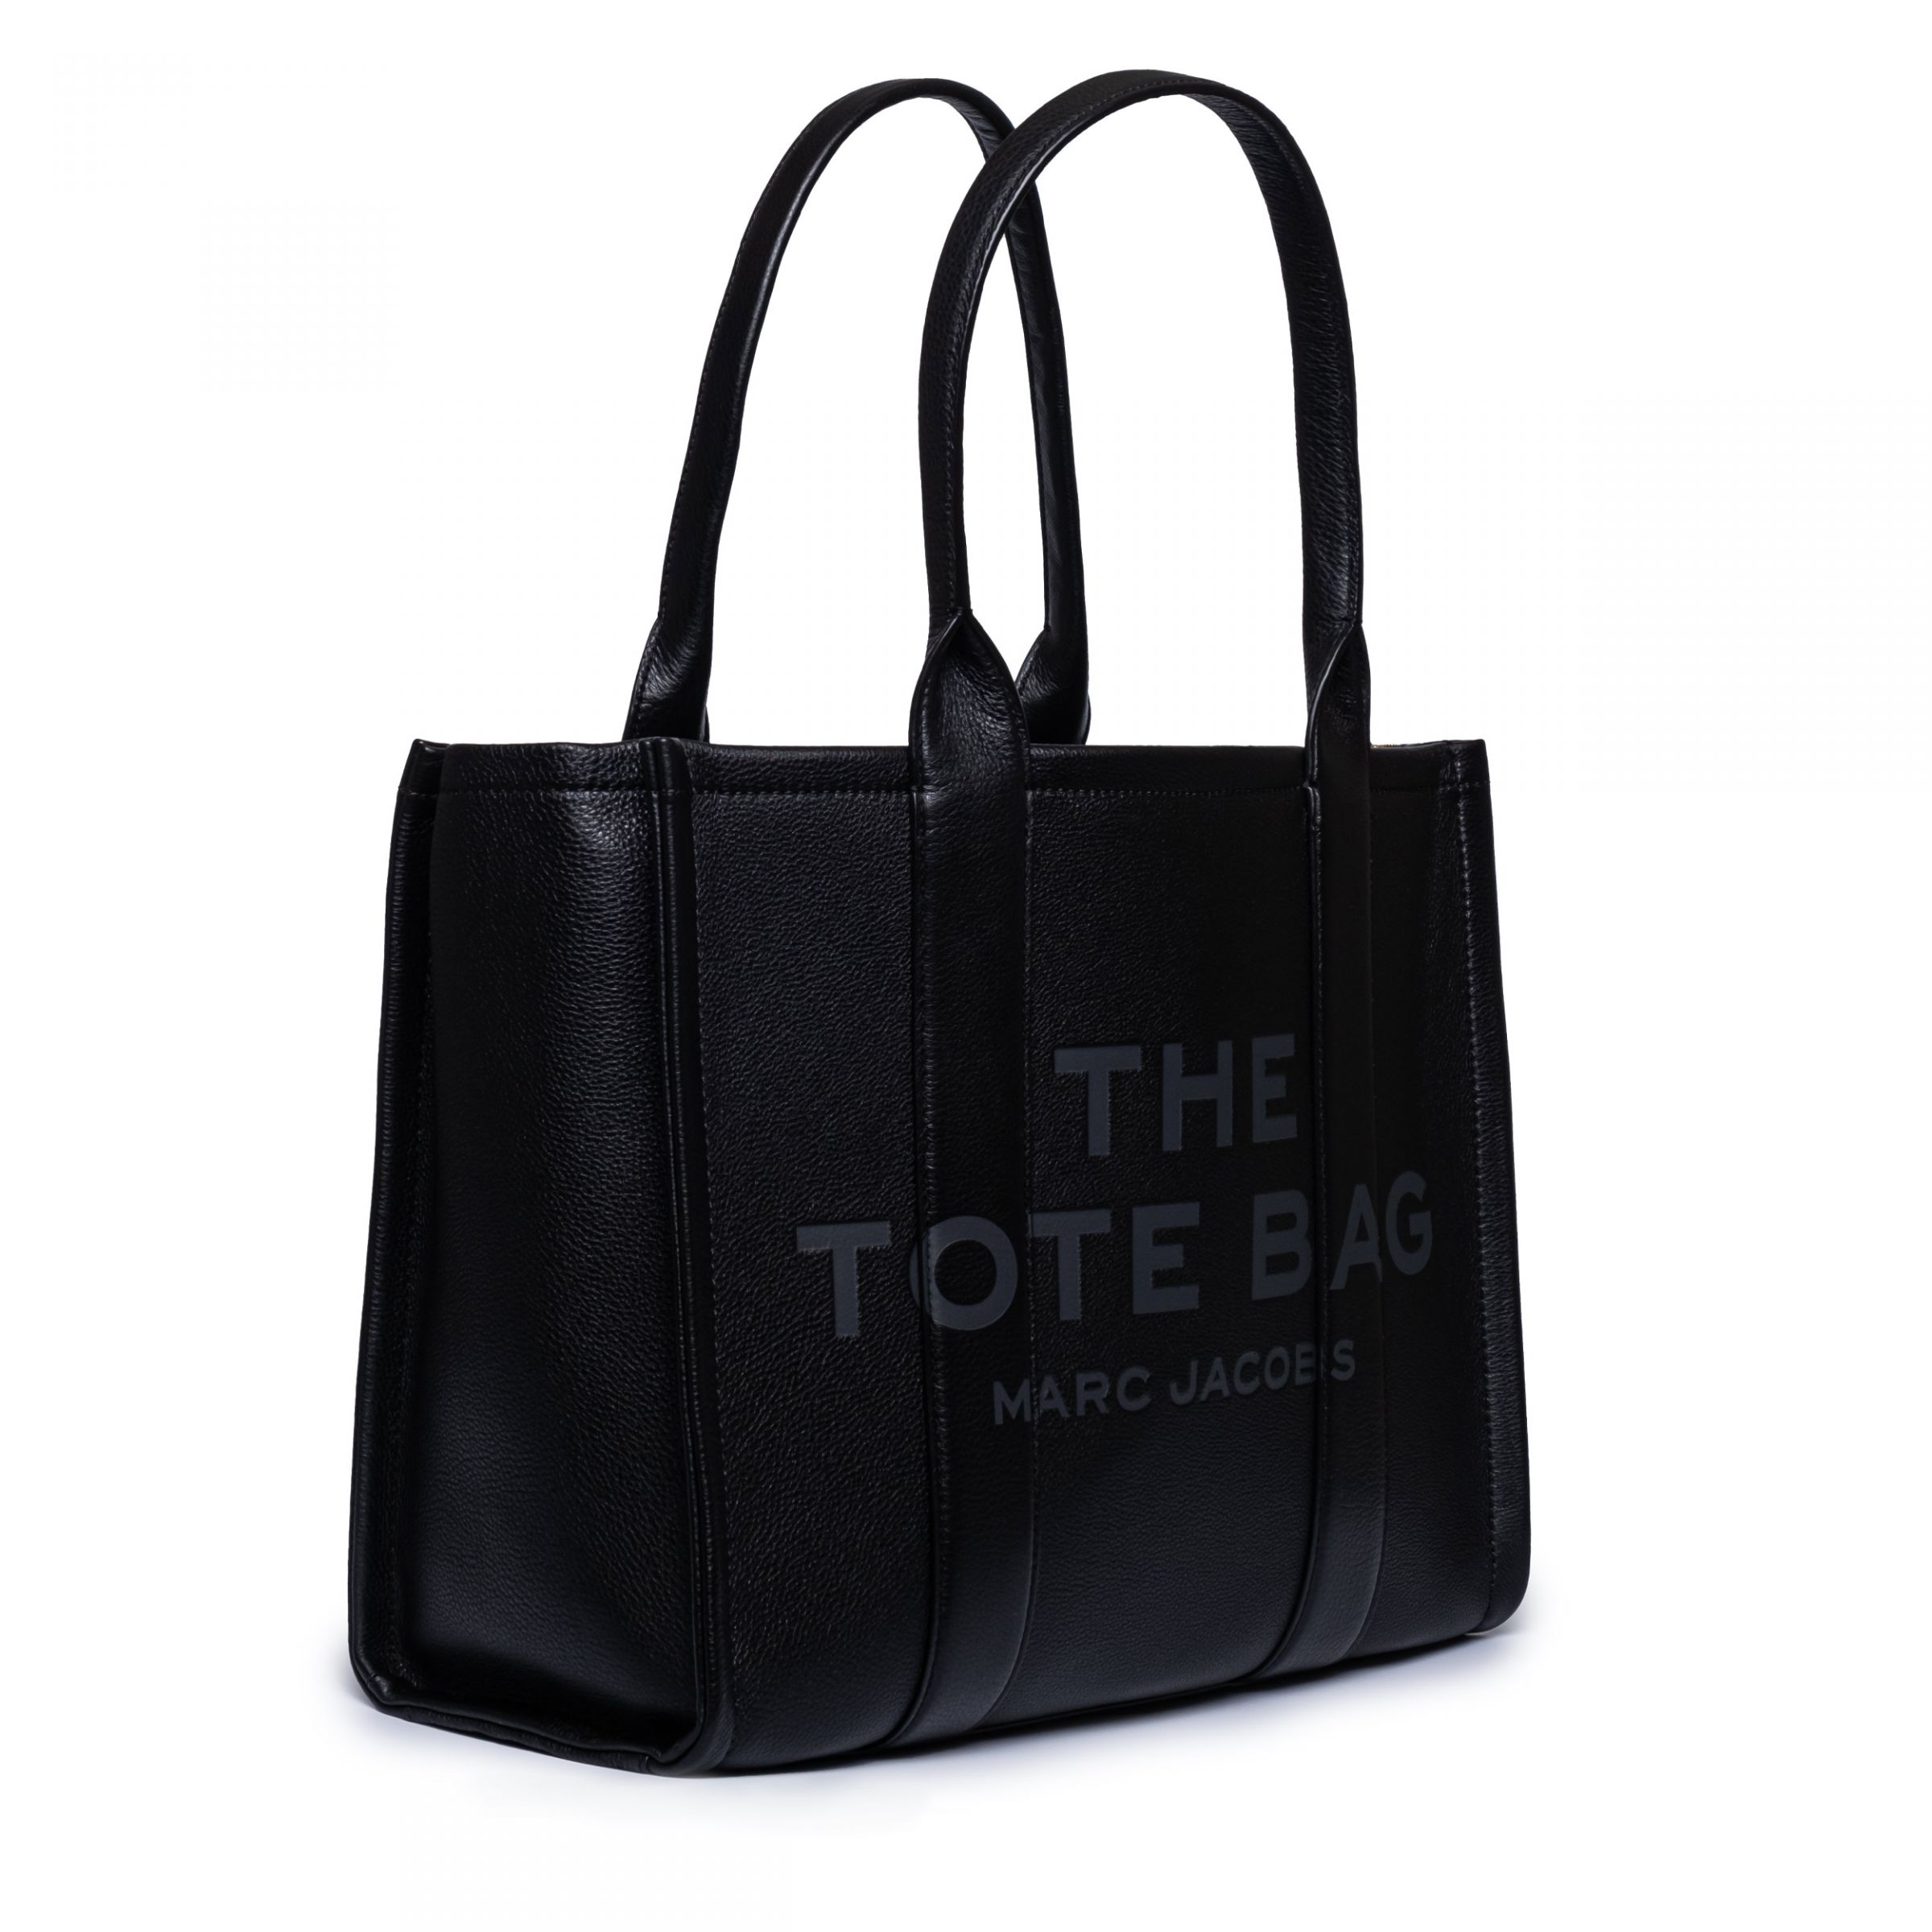 Сумка Marc Jacobs The Tote Bag черная